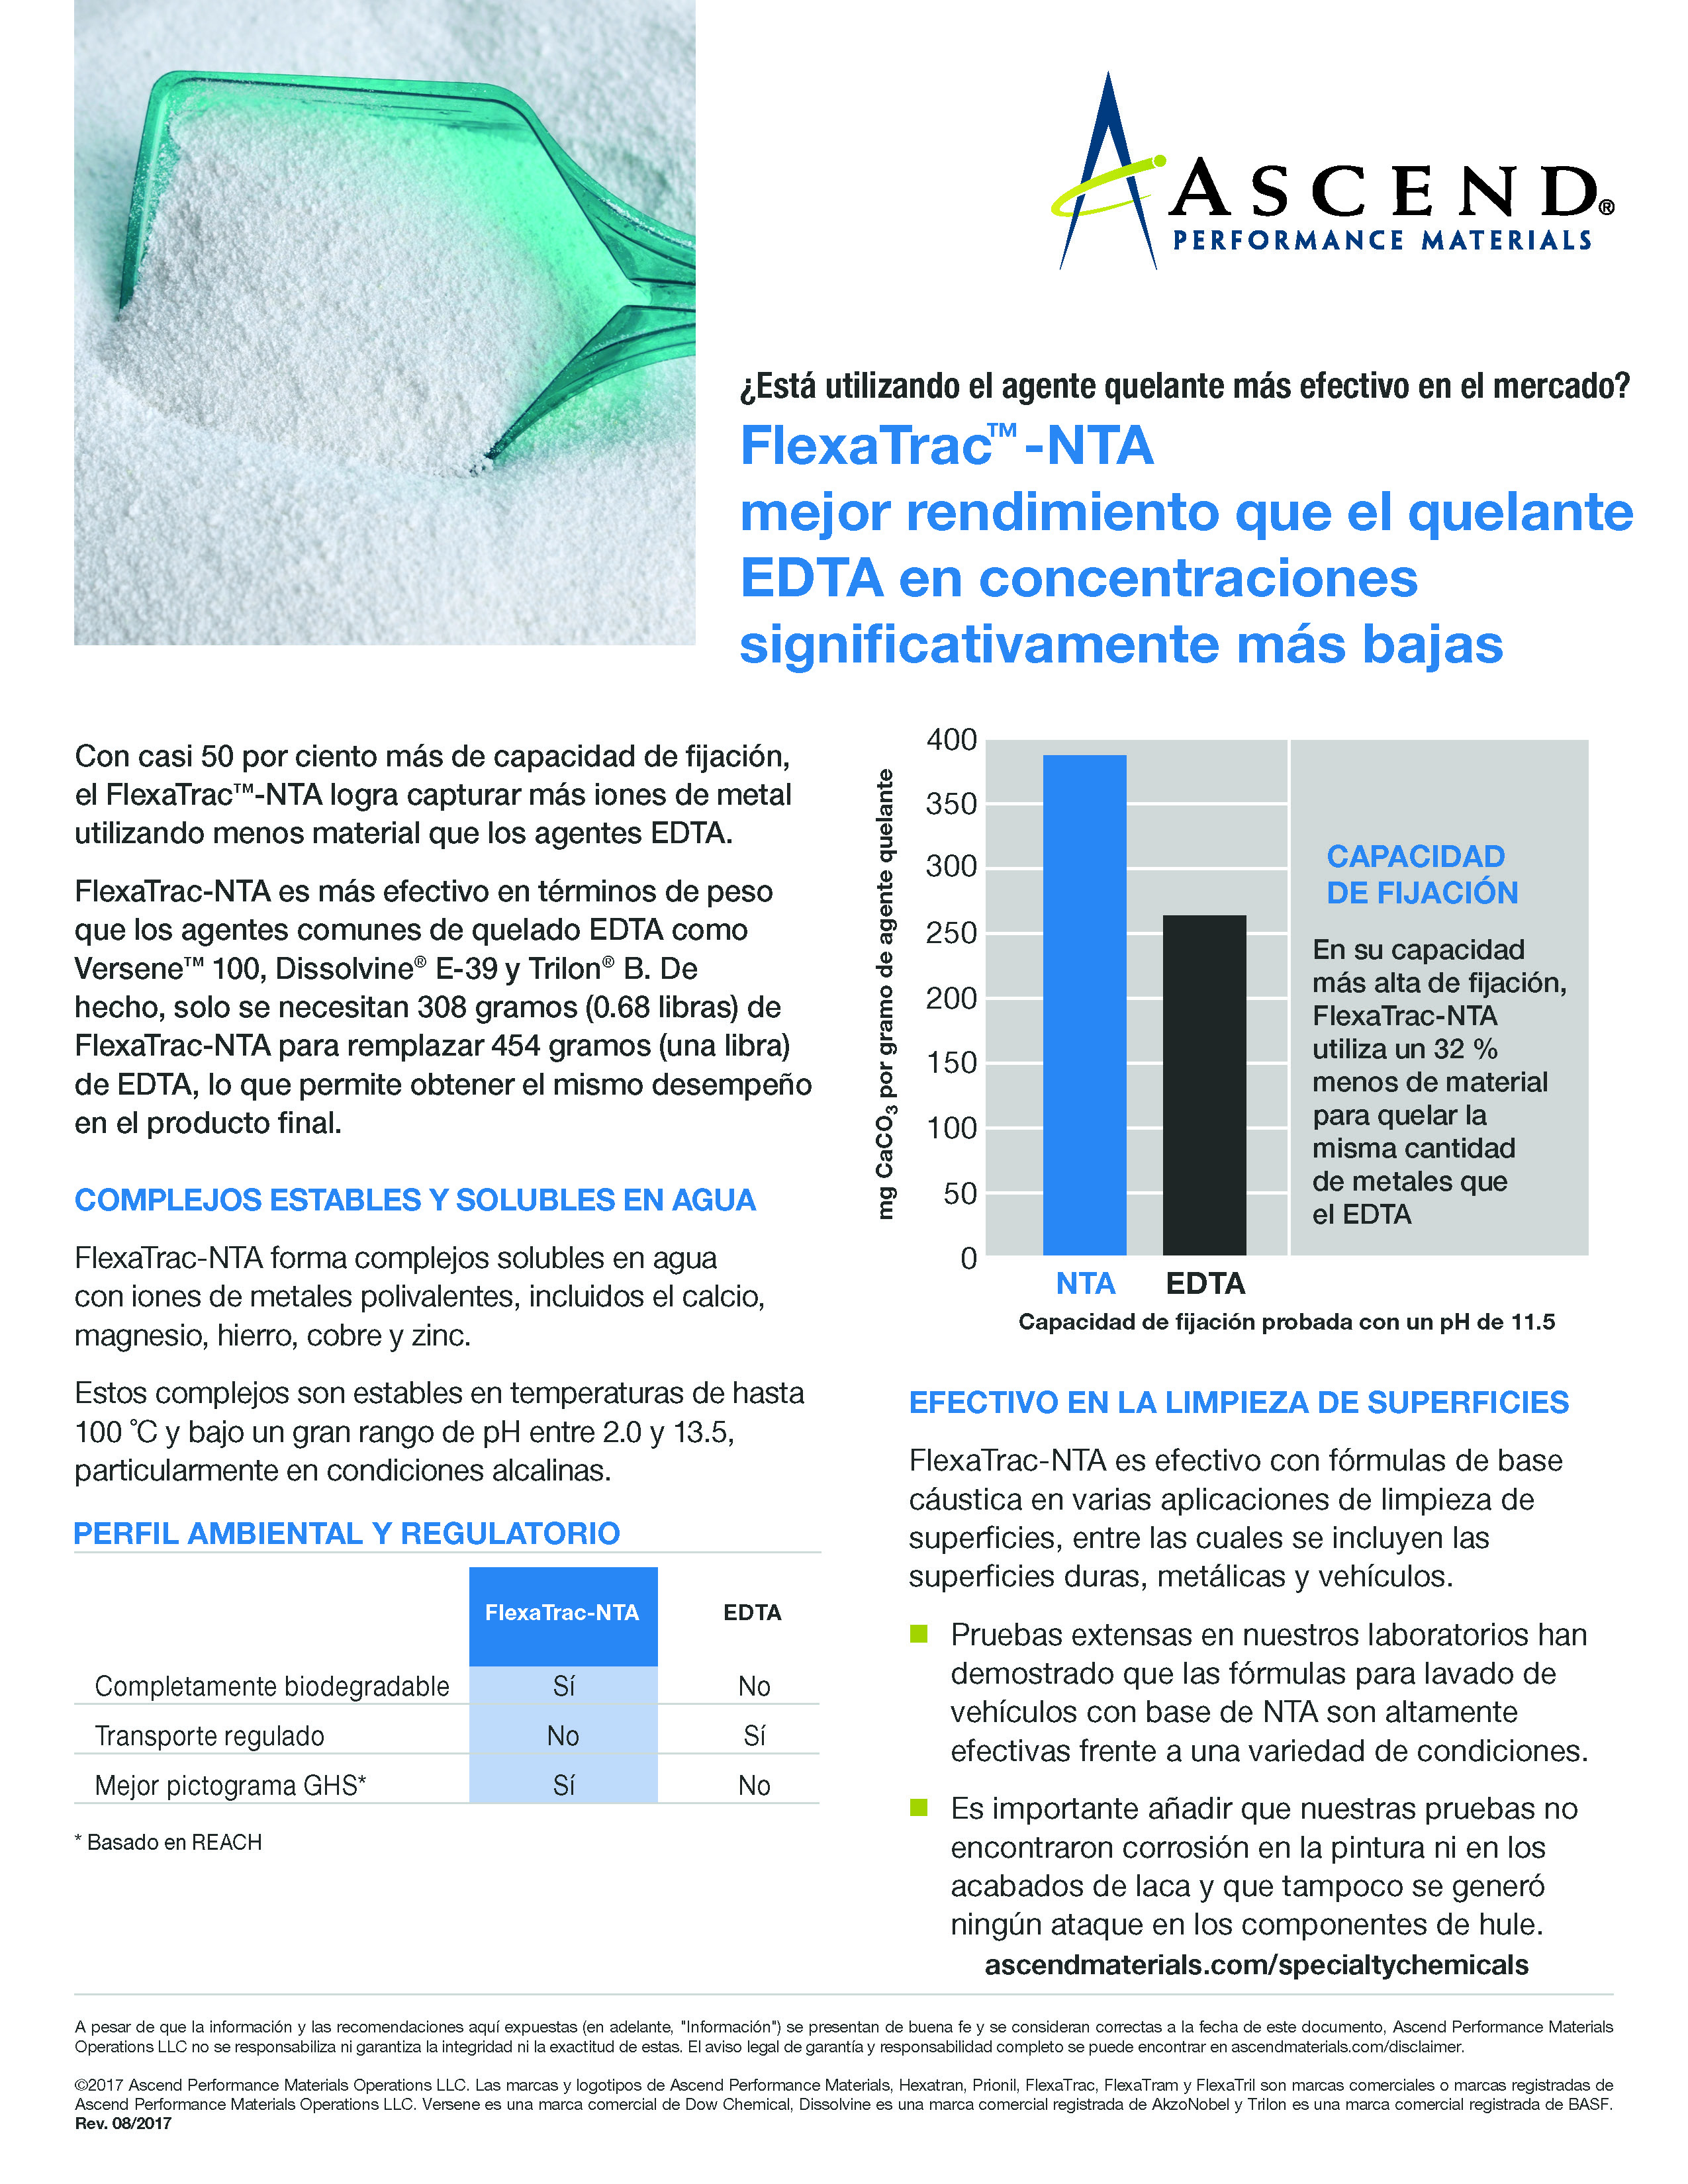 FlexaTrac®-NTA 与 EDTA